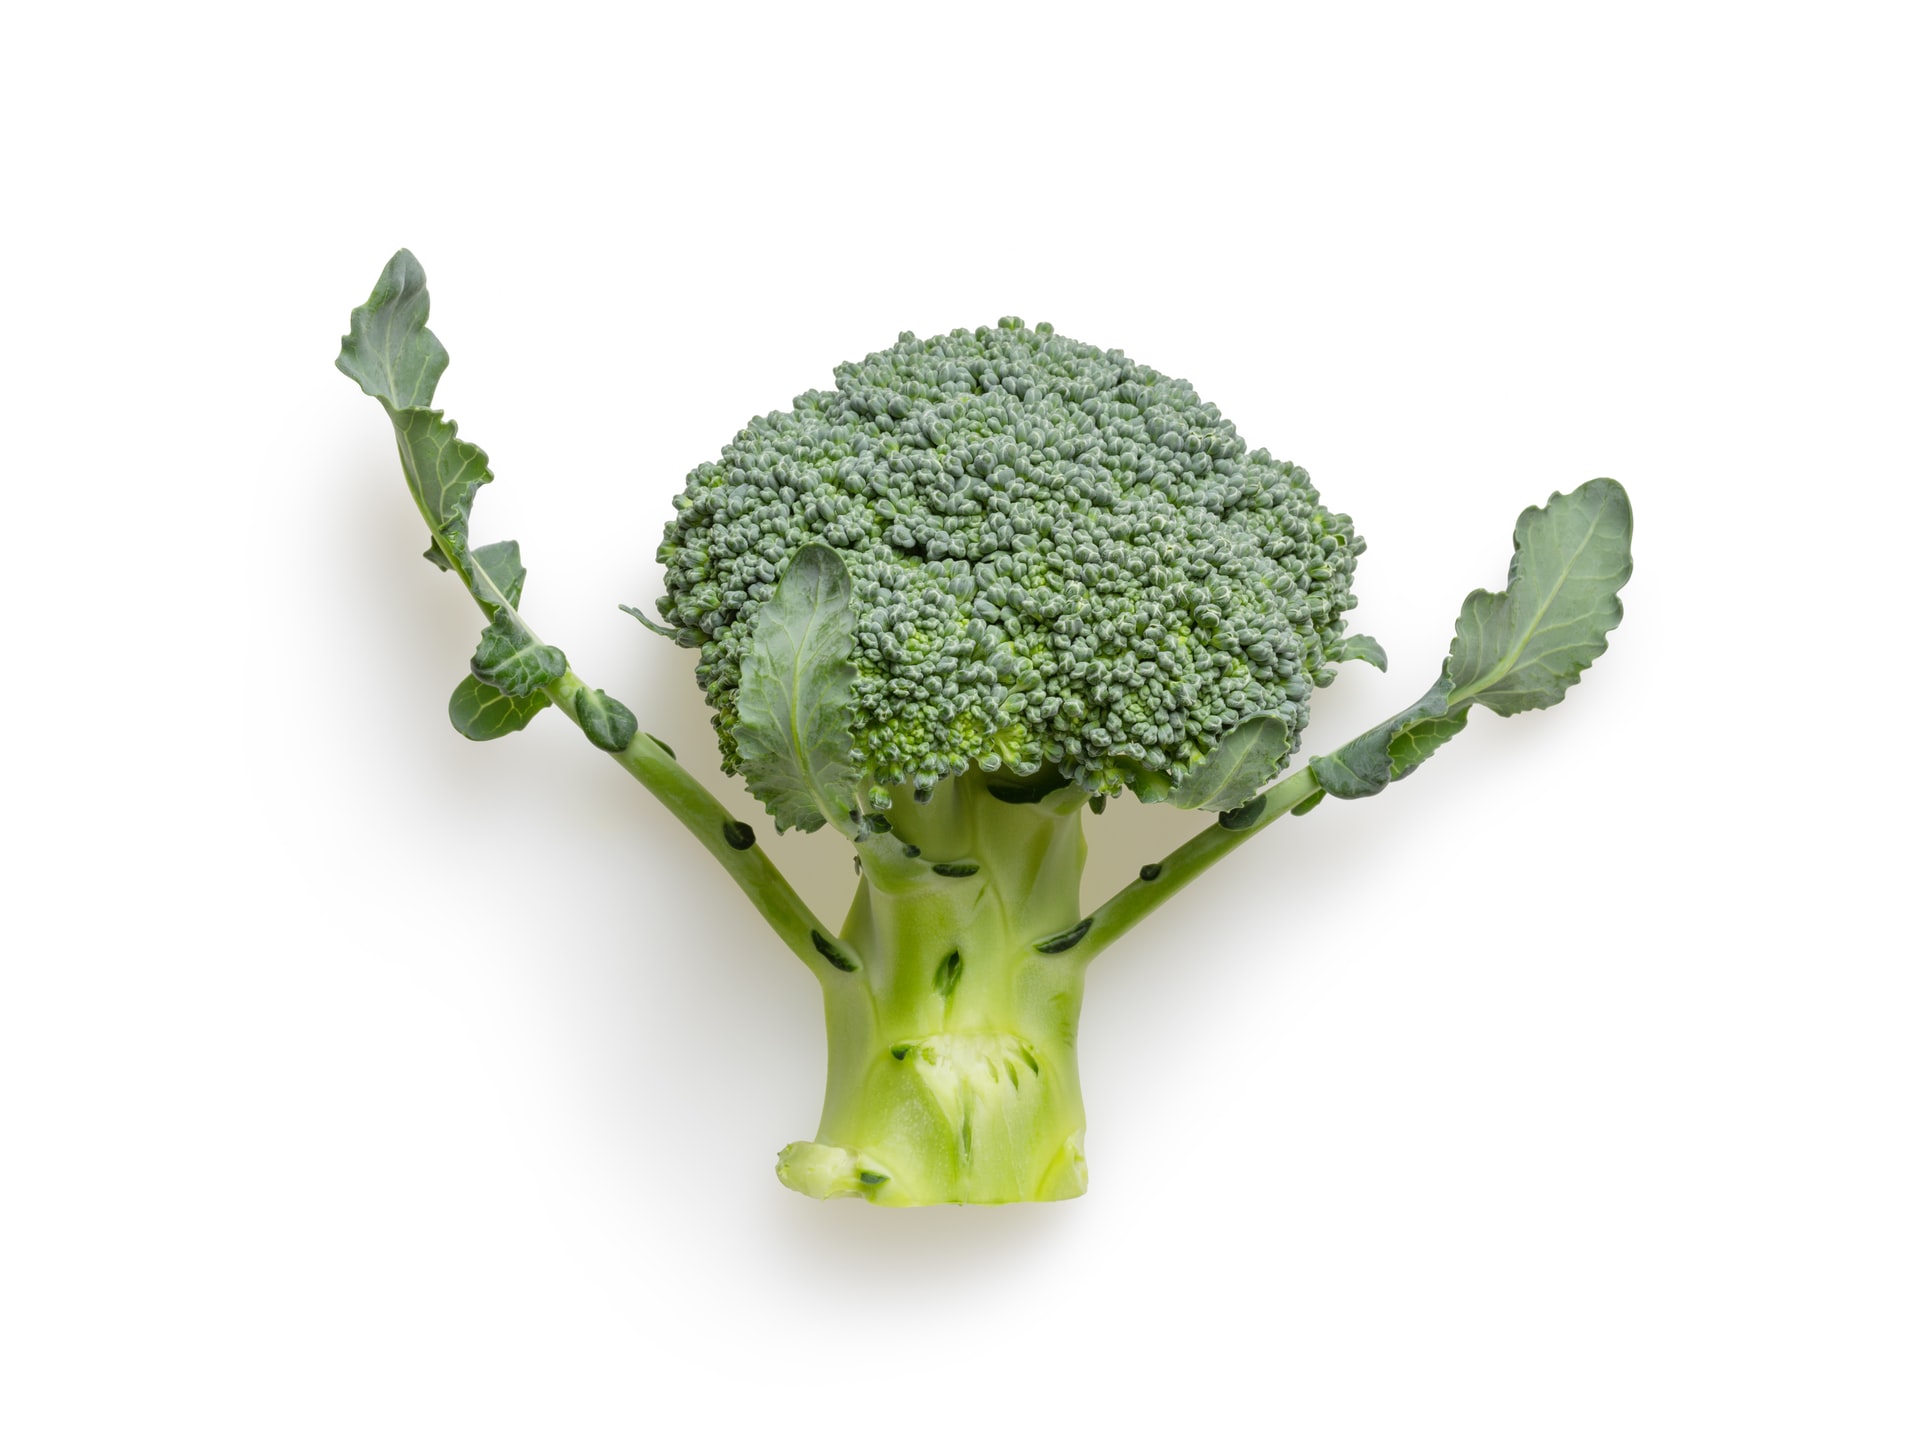 Broccoli Recipes